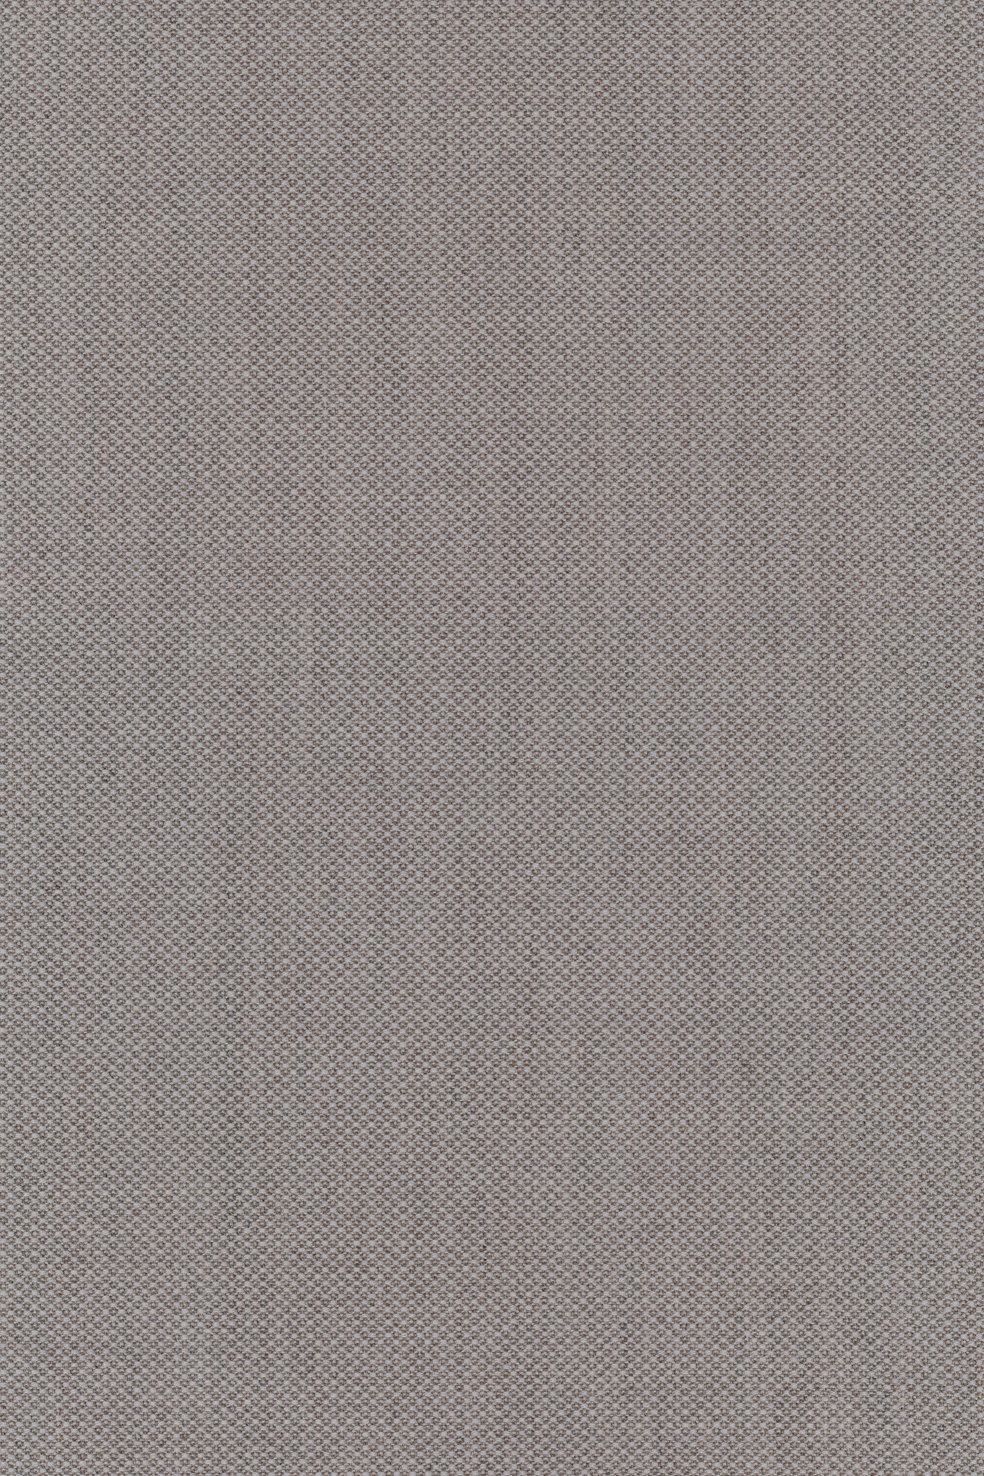 Fabric sample Fiord 251 grey